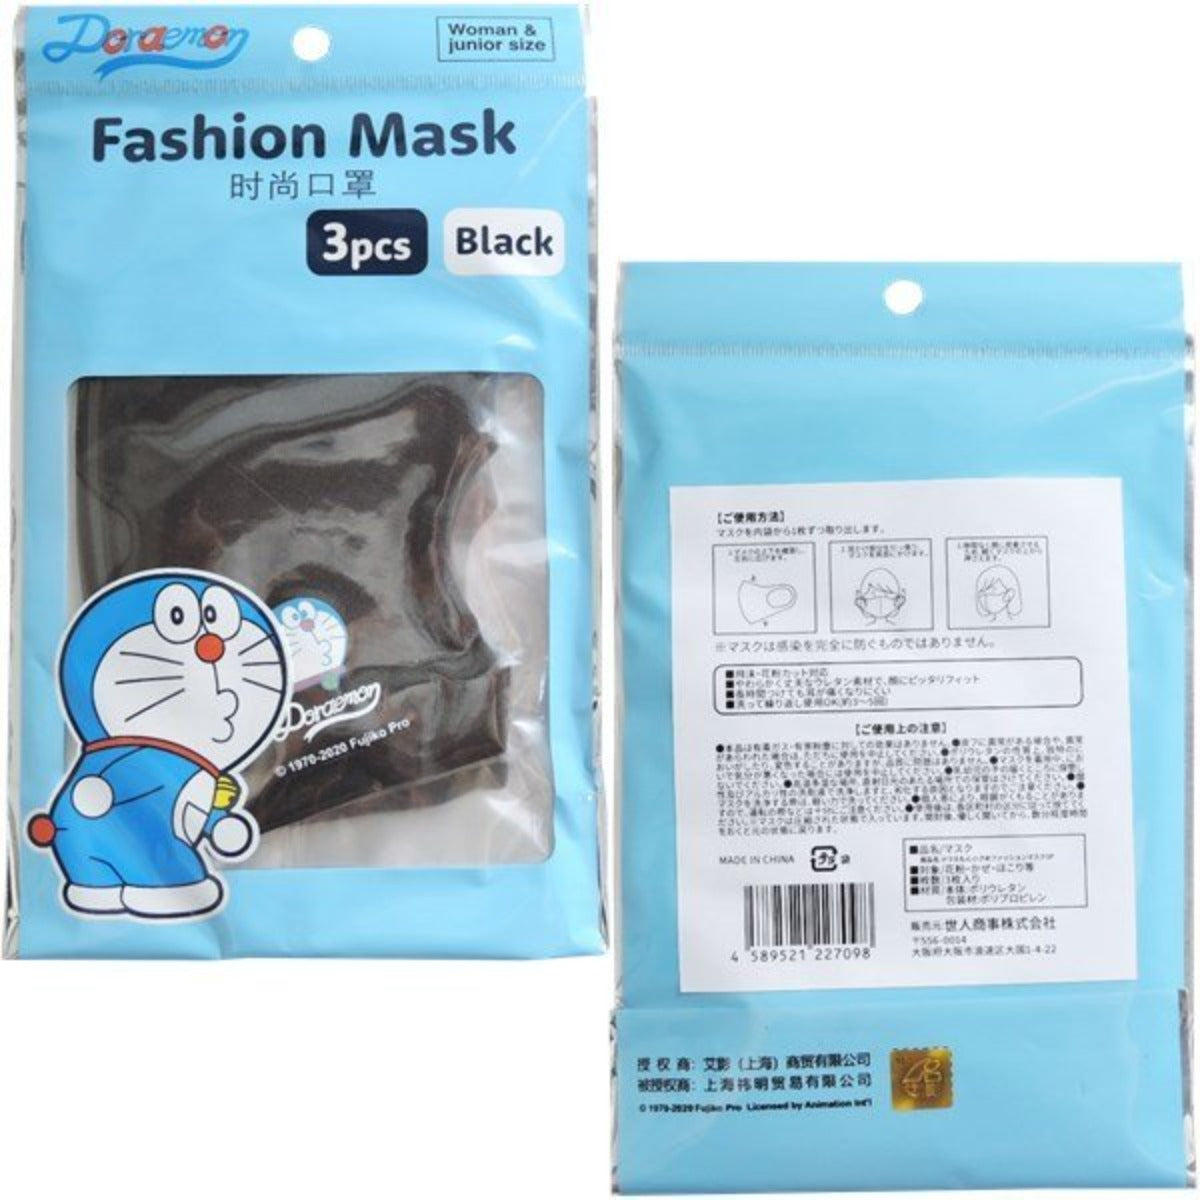 Fashion Mask - Doraemon Washable Q3 (Japan Edition)